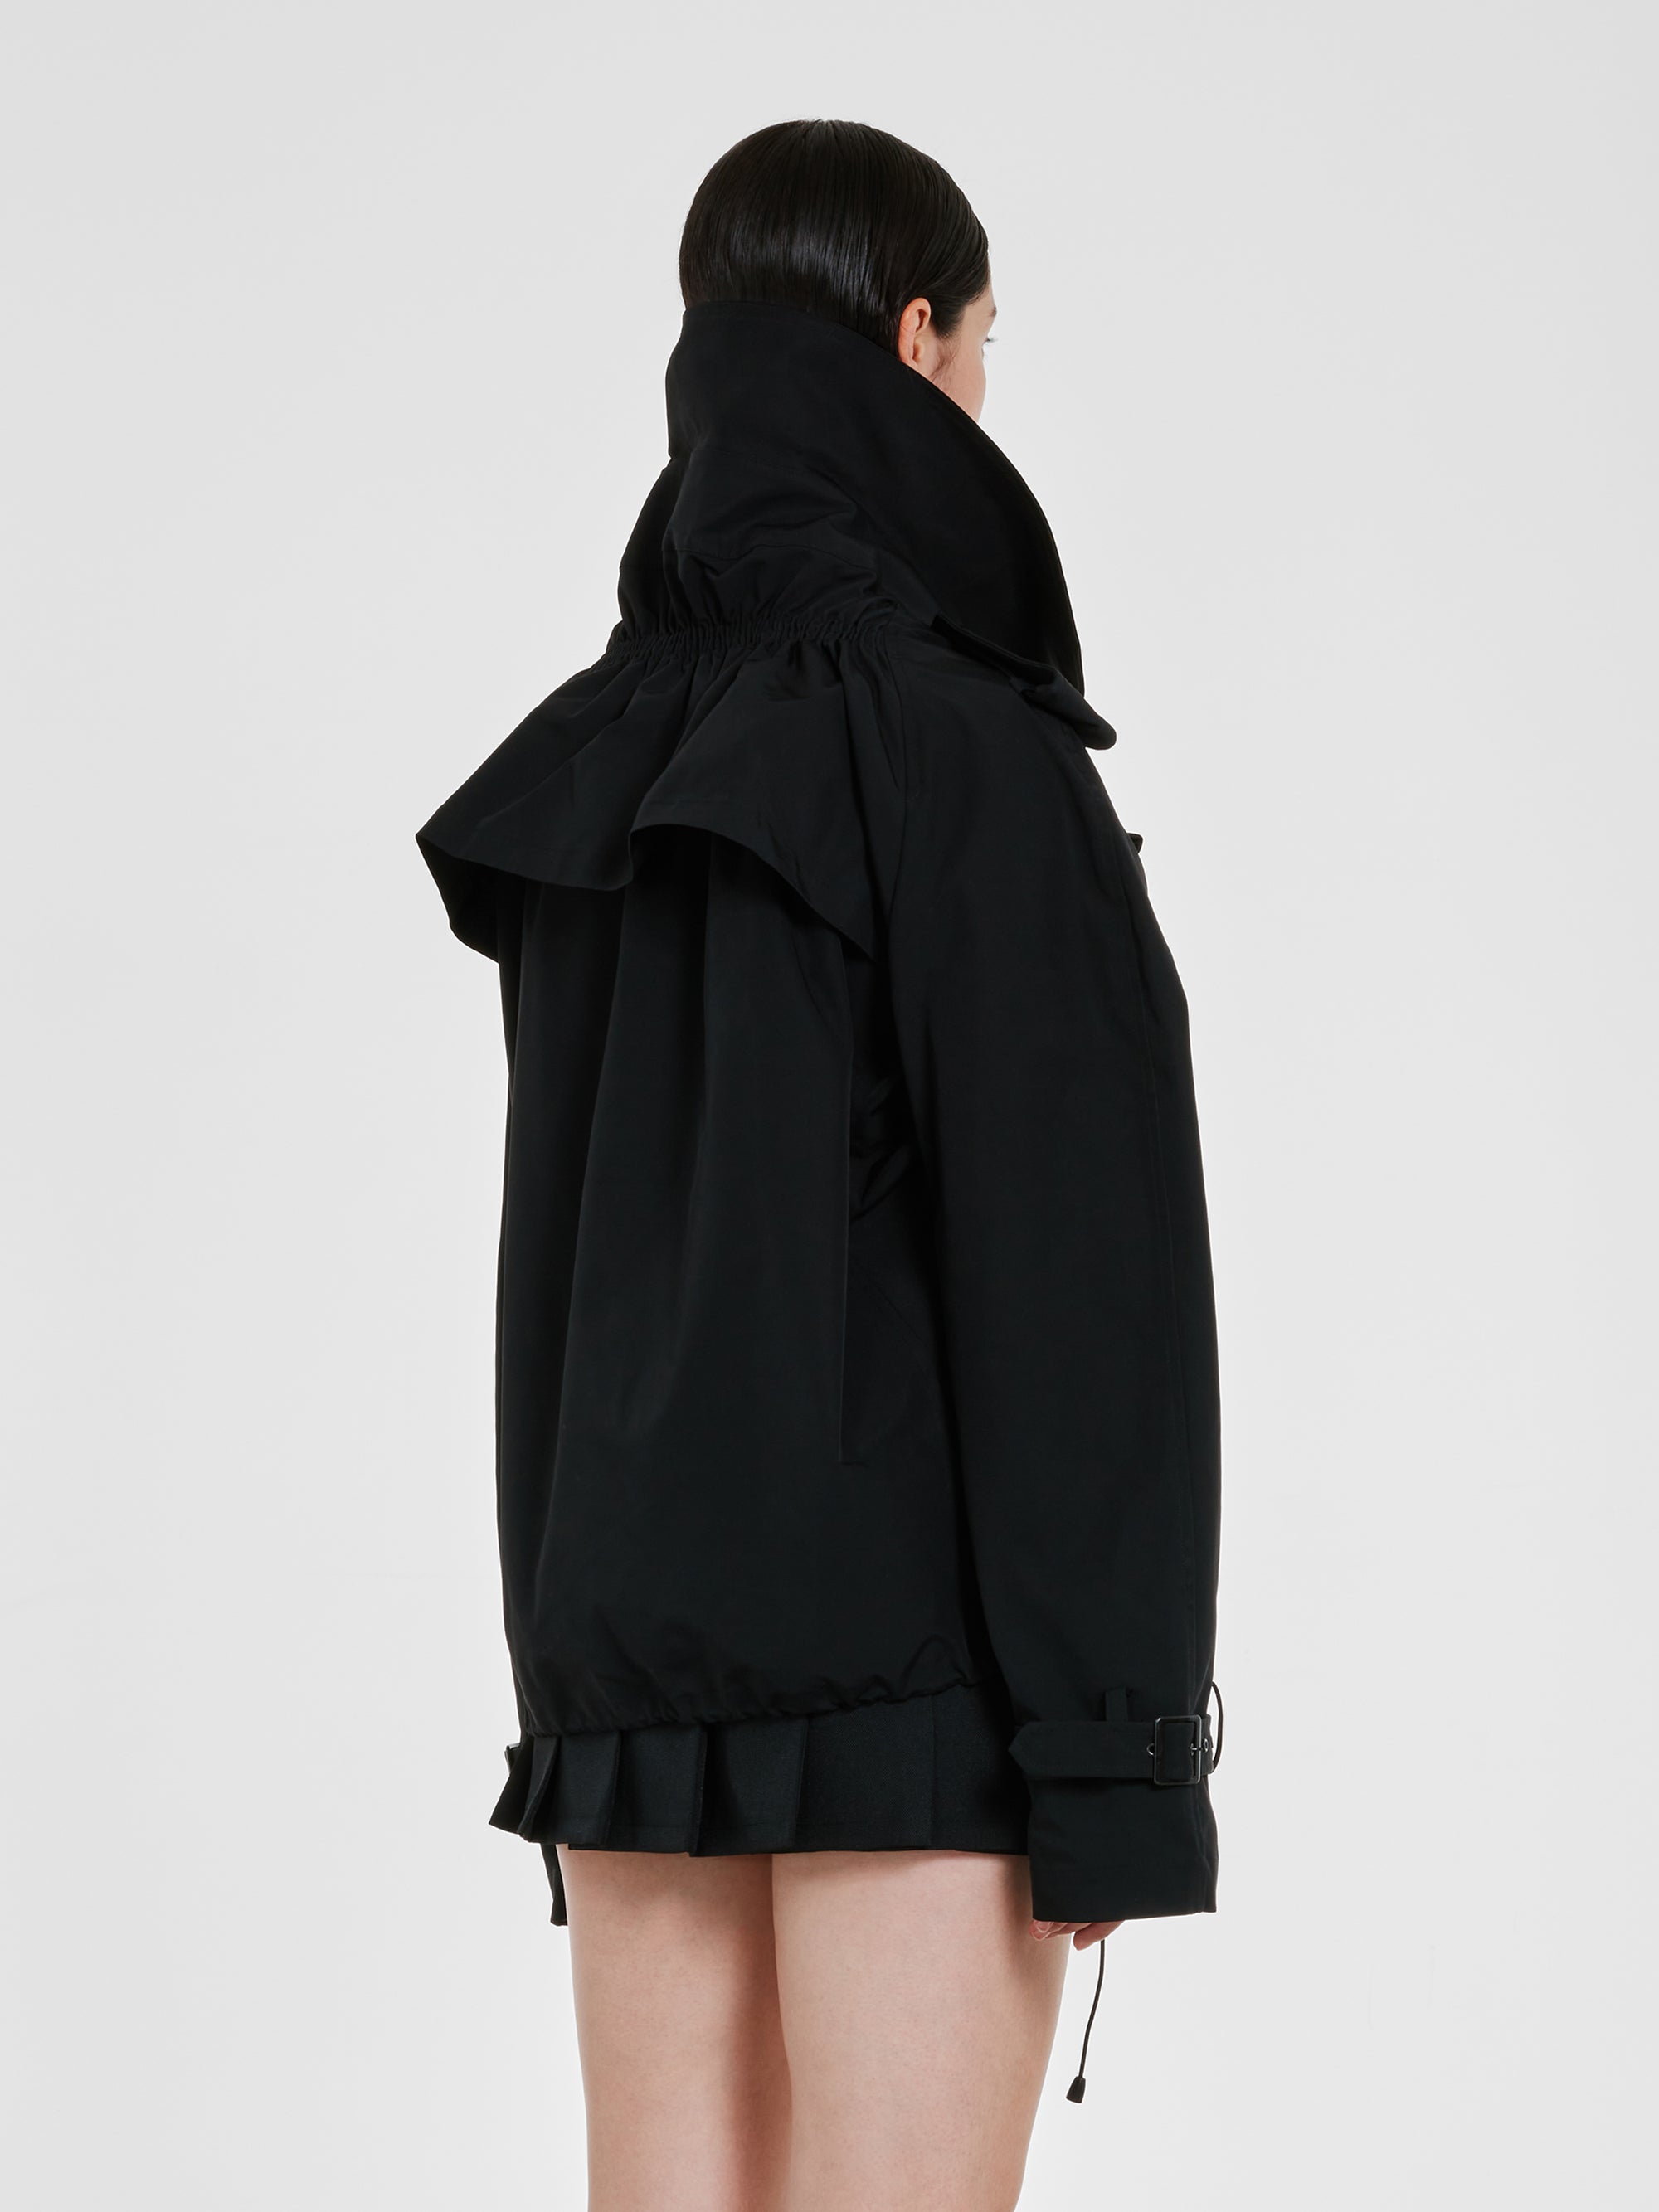 Junya Watanabe - Women’s Buttoned Pea Coat - (Black) view 3